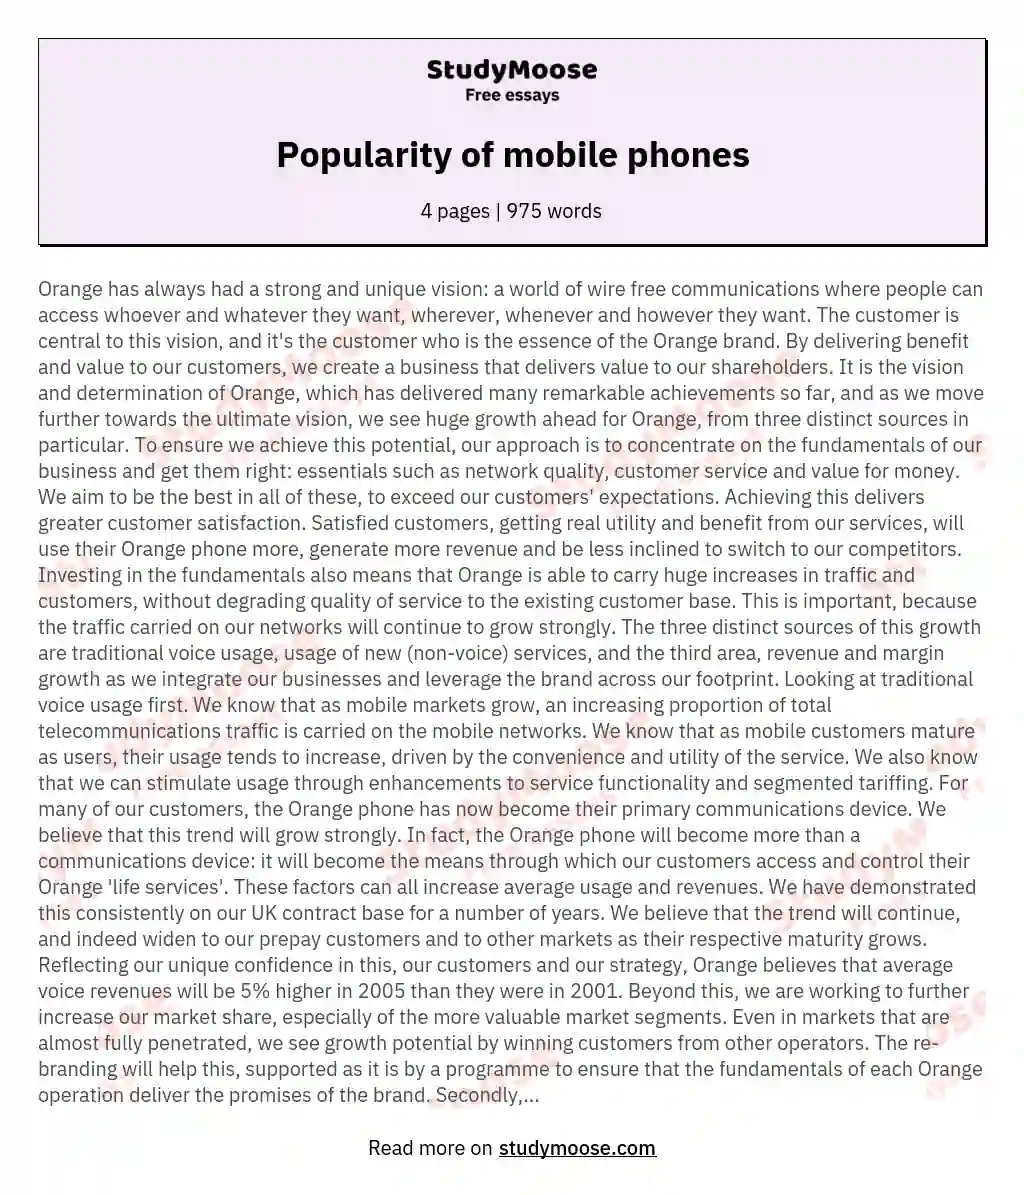 Popularity of mobile phones essay